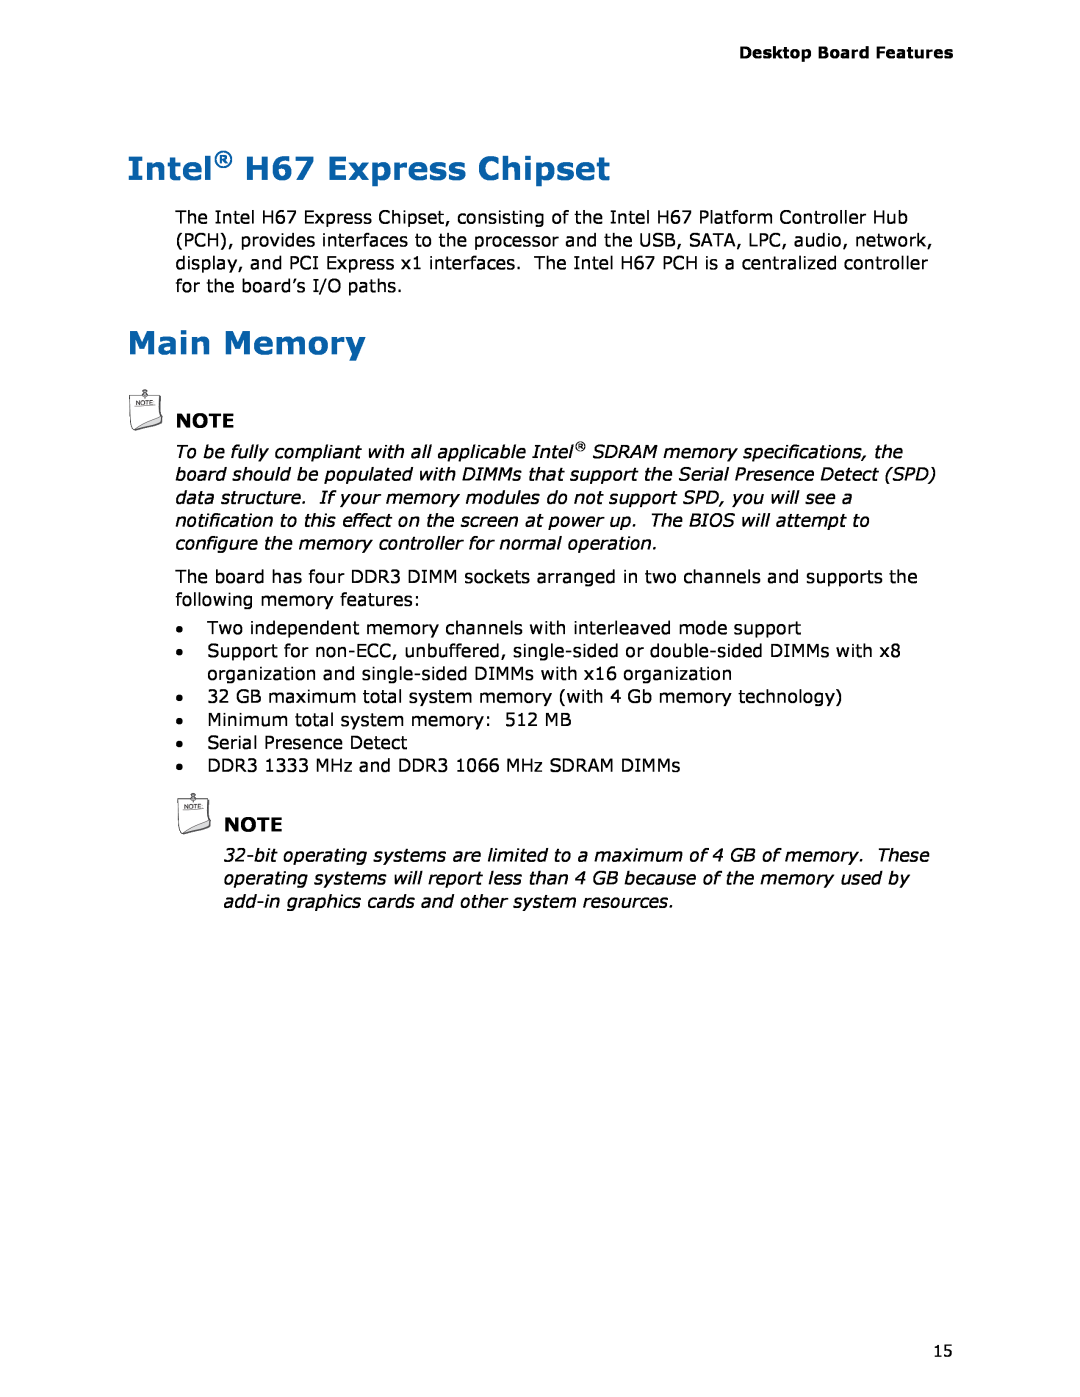 Intel BLKDH67GDB3, G13841-001 manual Intel H67 Express Chipset, Main Memory 